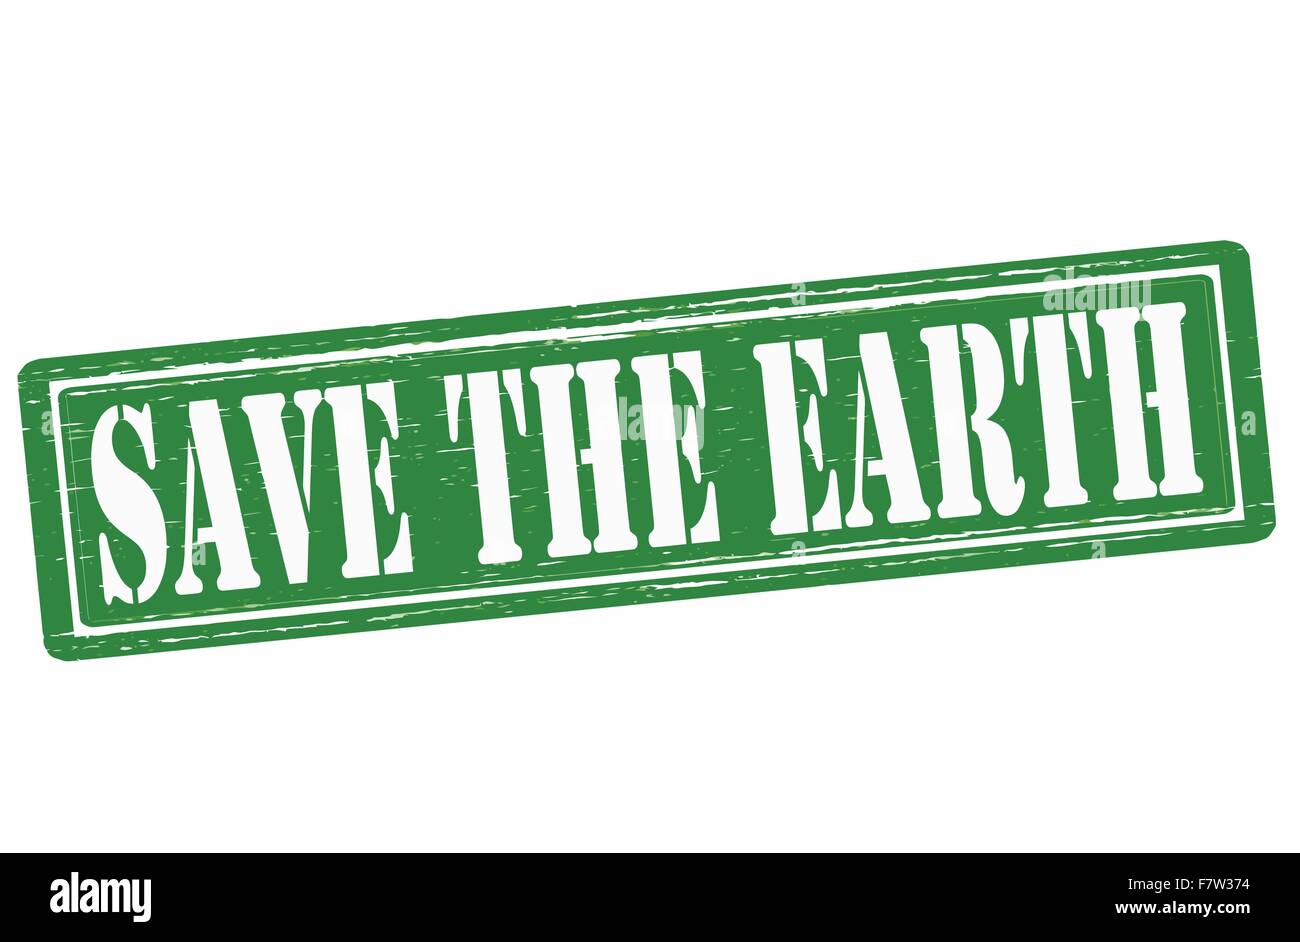 Die Erde retten Stock Vektor